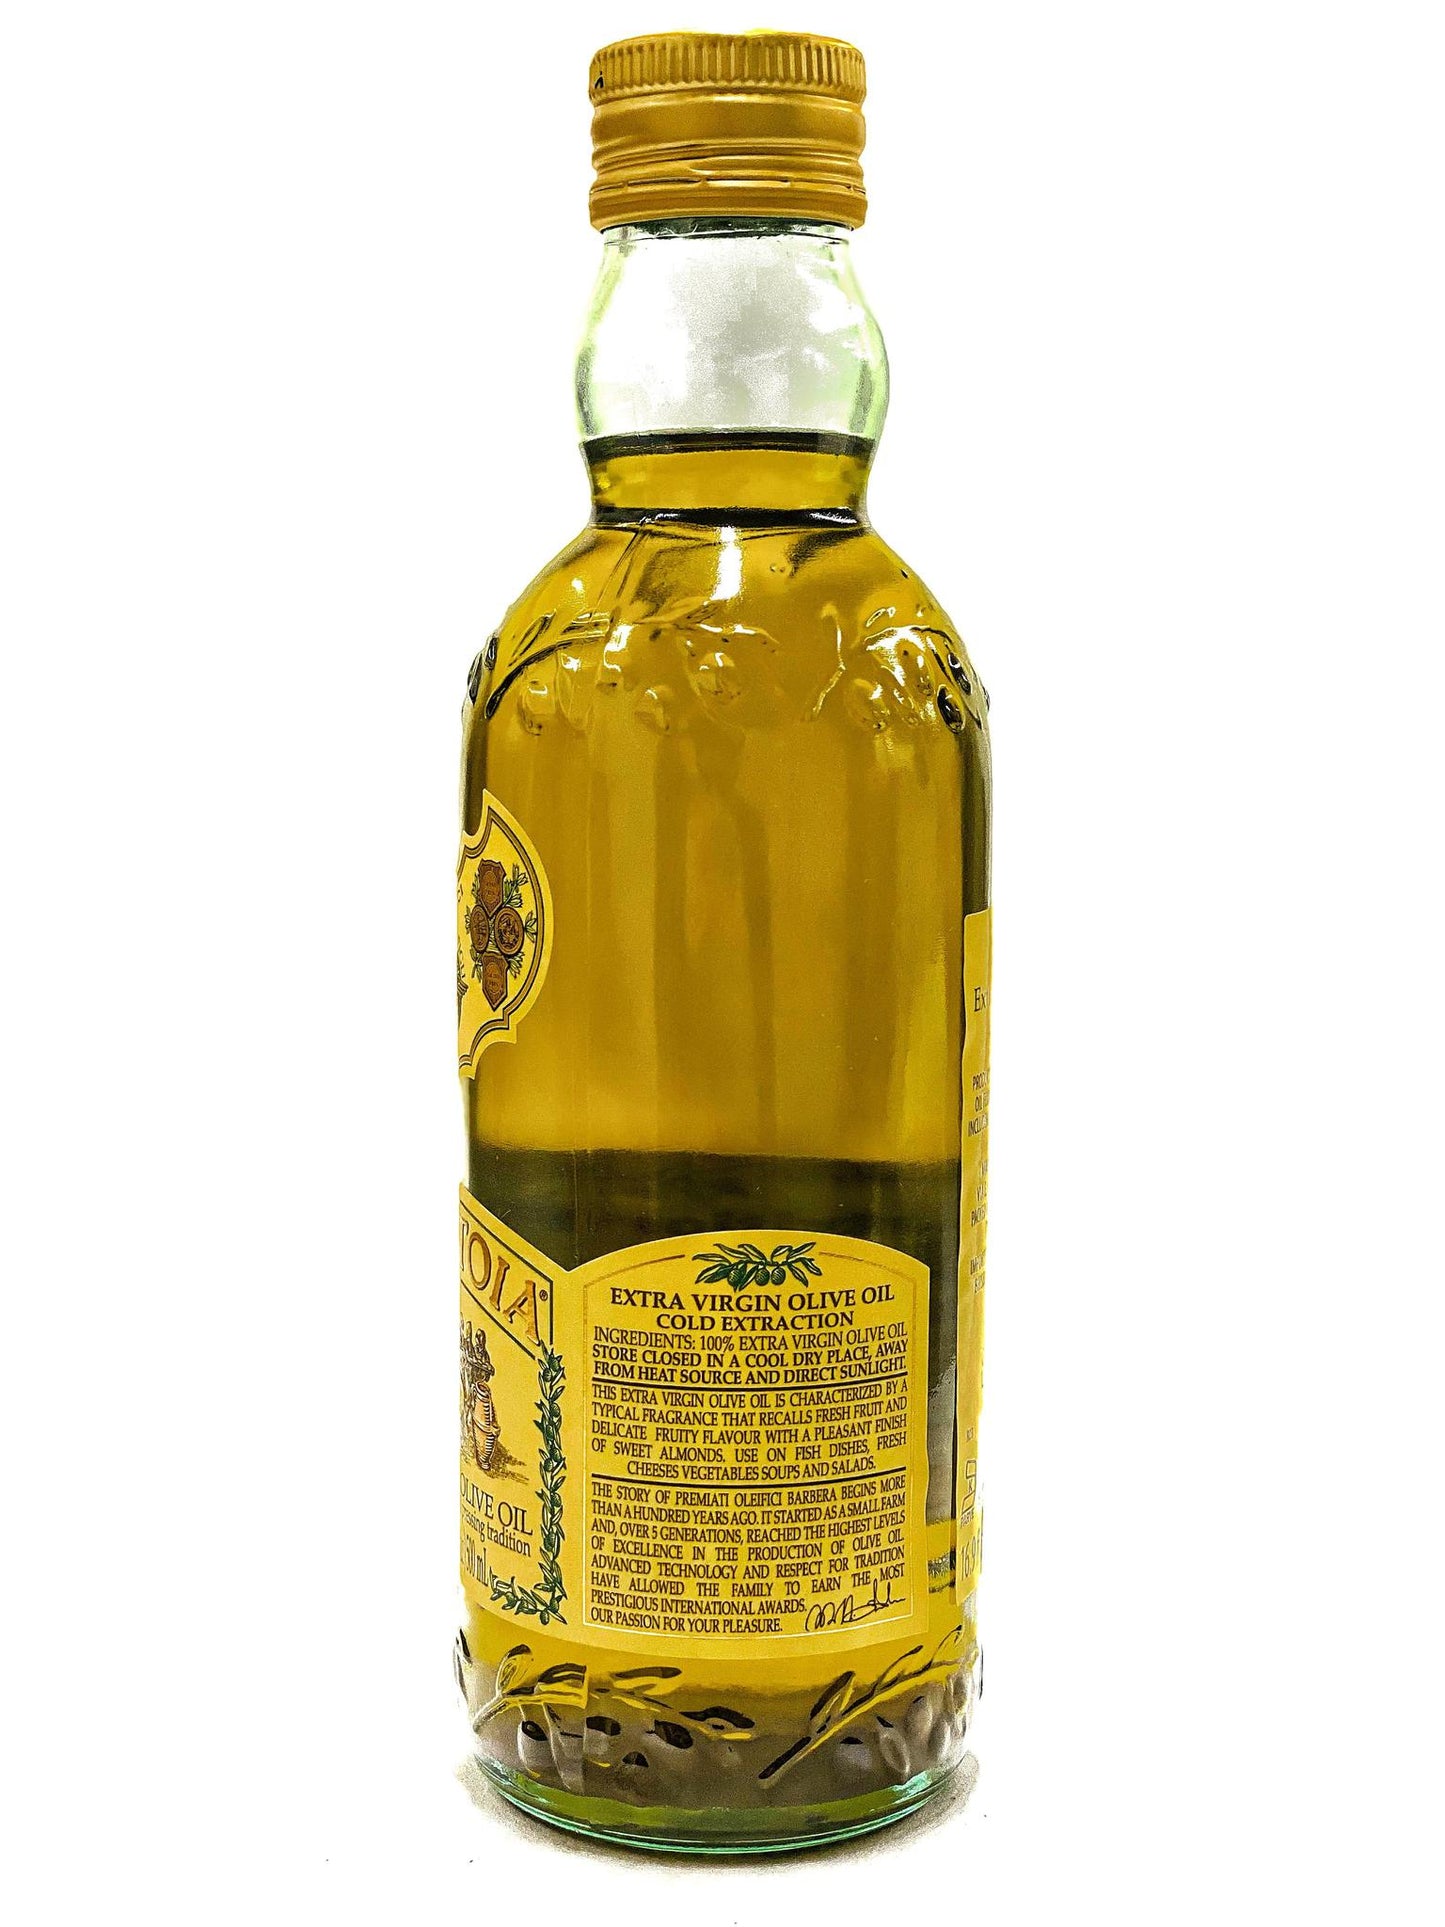 Oleific Frantoia Extra Virgin Olive Oil, 16.9 fl oz